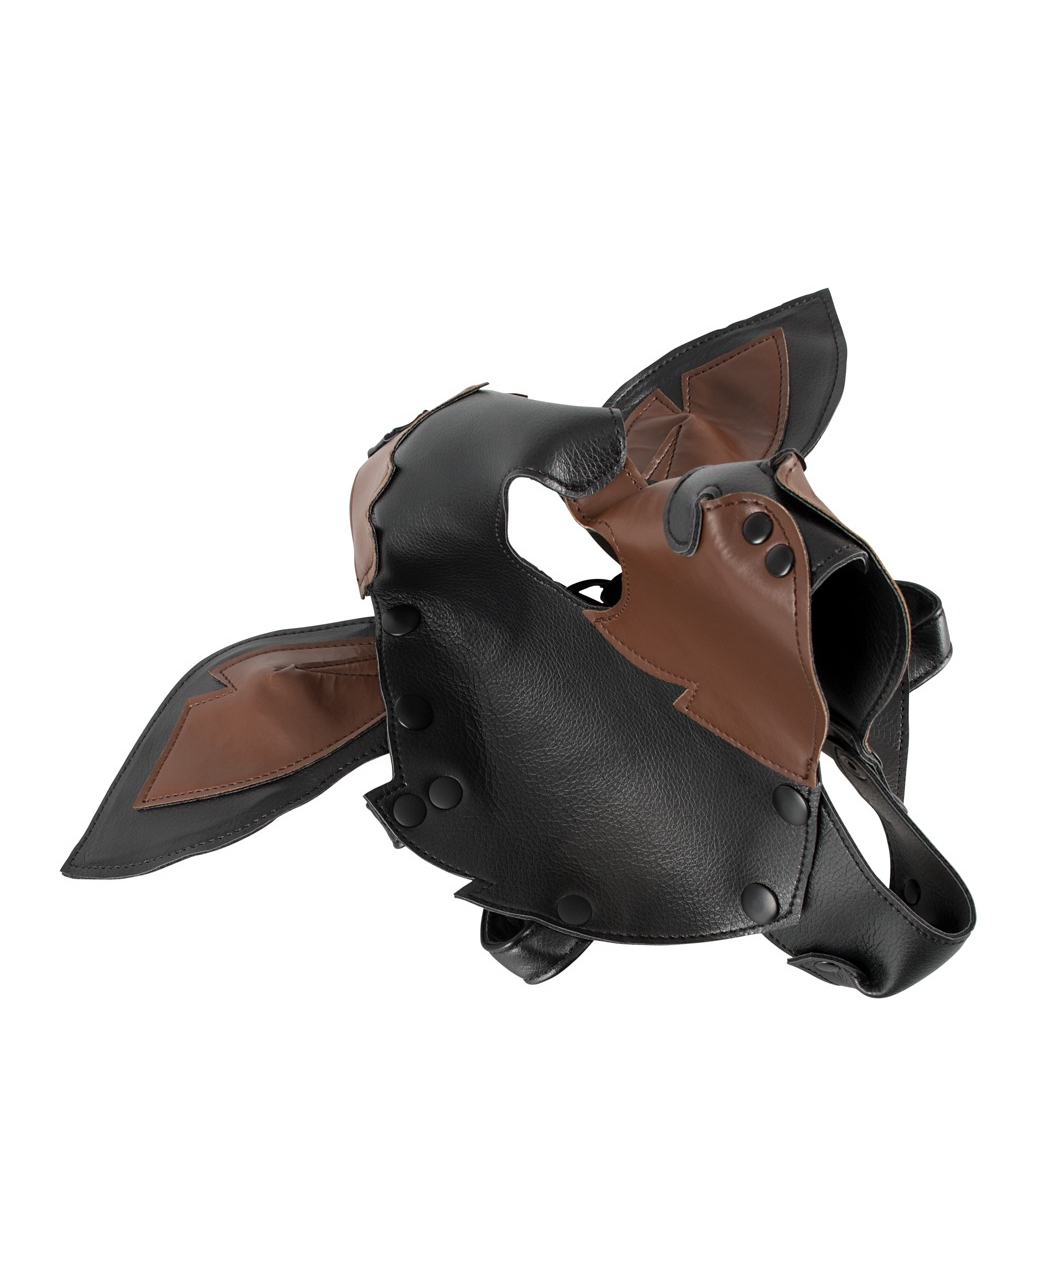 Fetish Collection dog mask